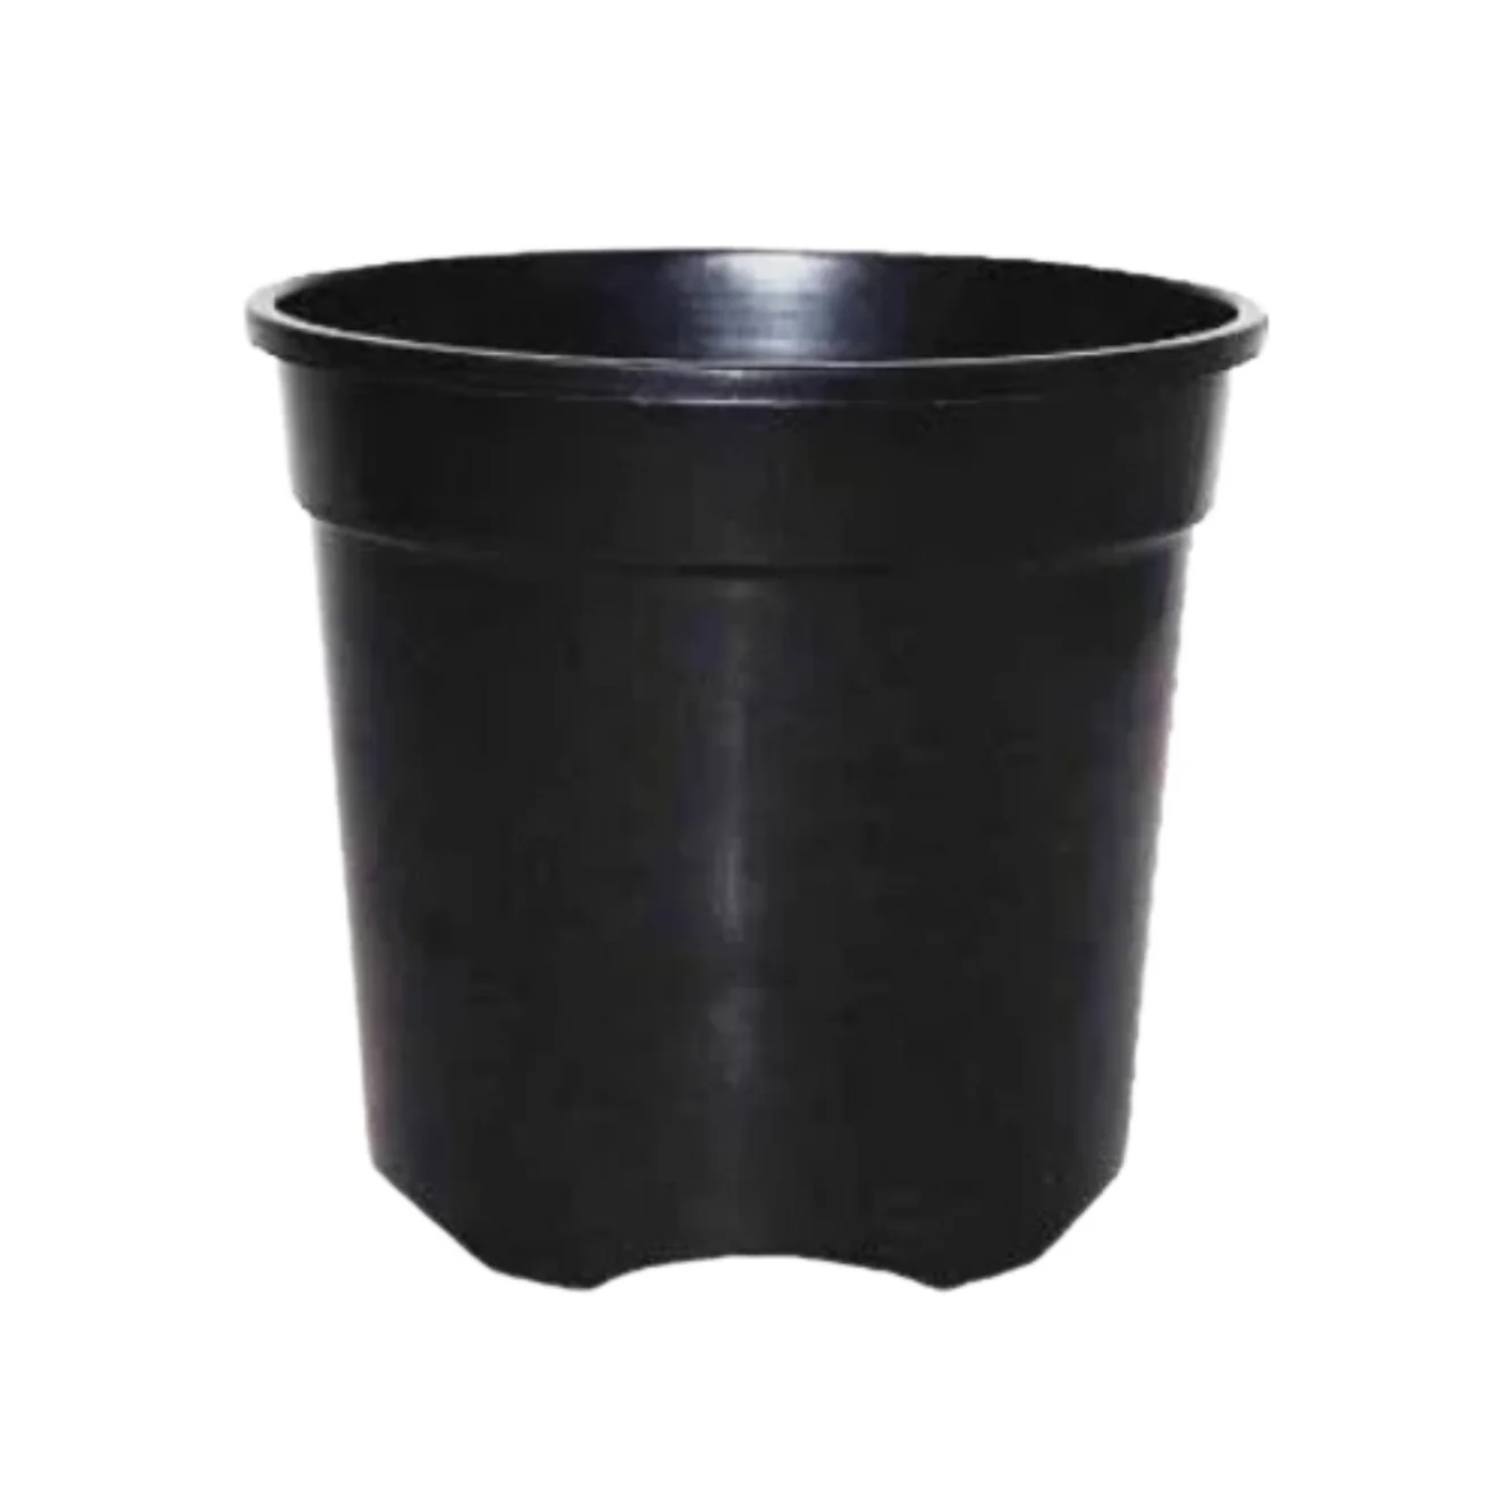 10 Inch Gro Pro Plastic Pot for Home & Garden